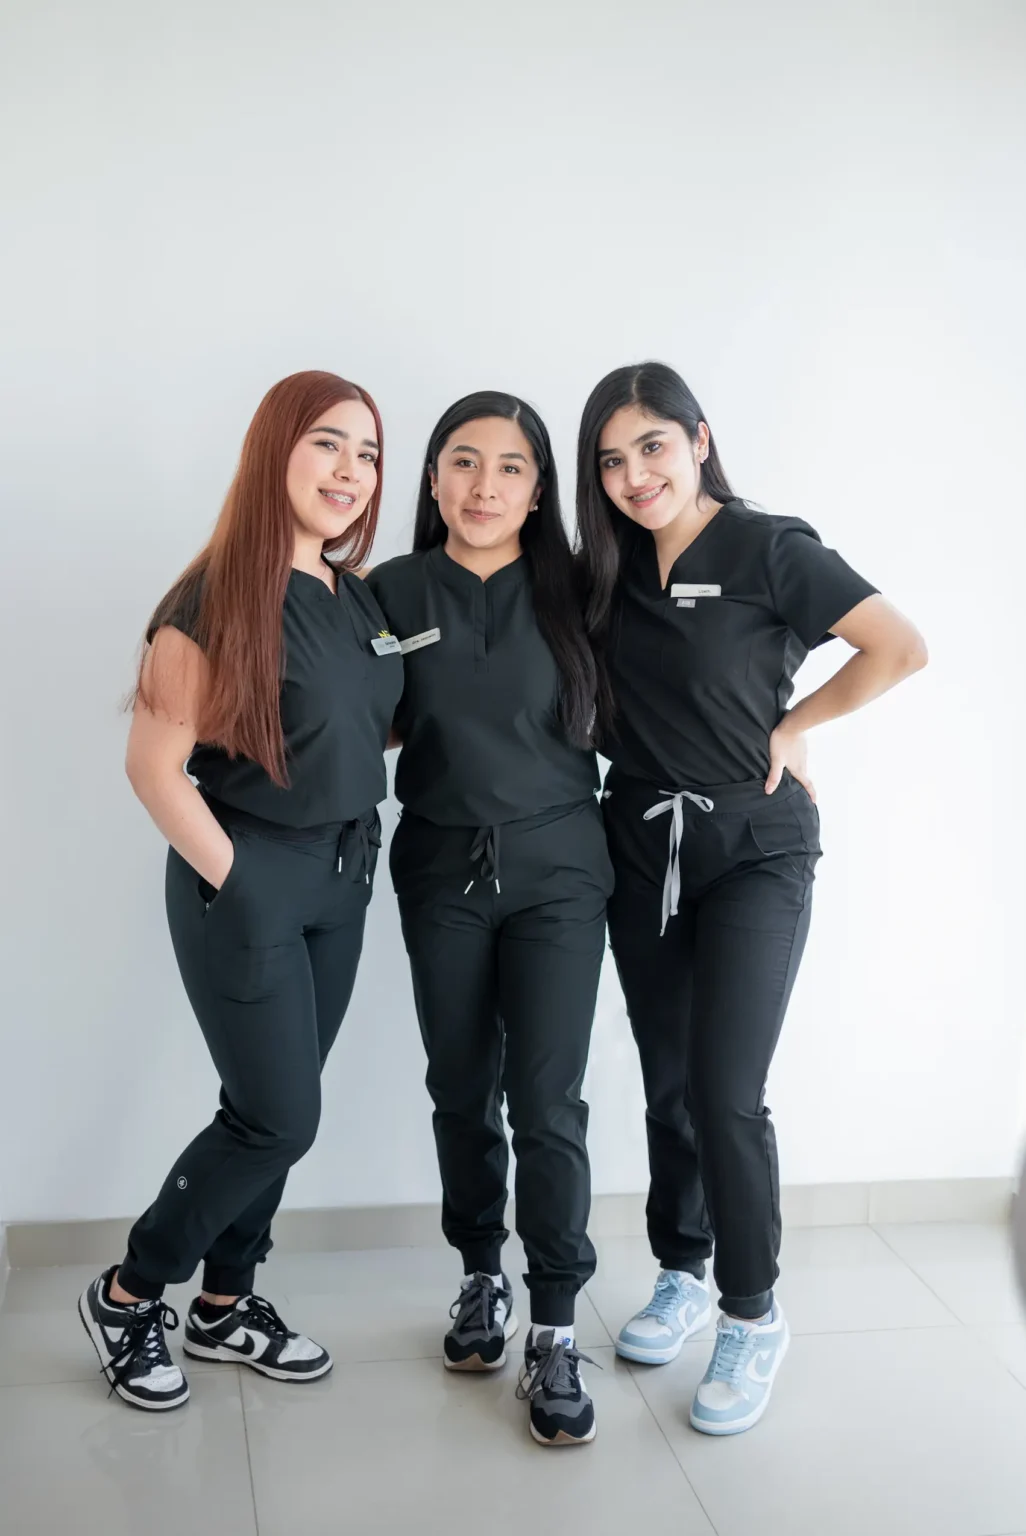 Three women in black uniforms posing together.